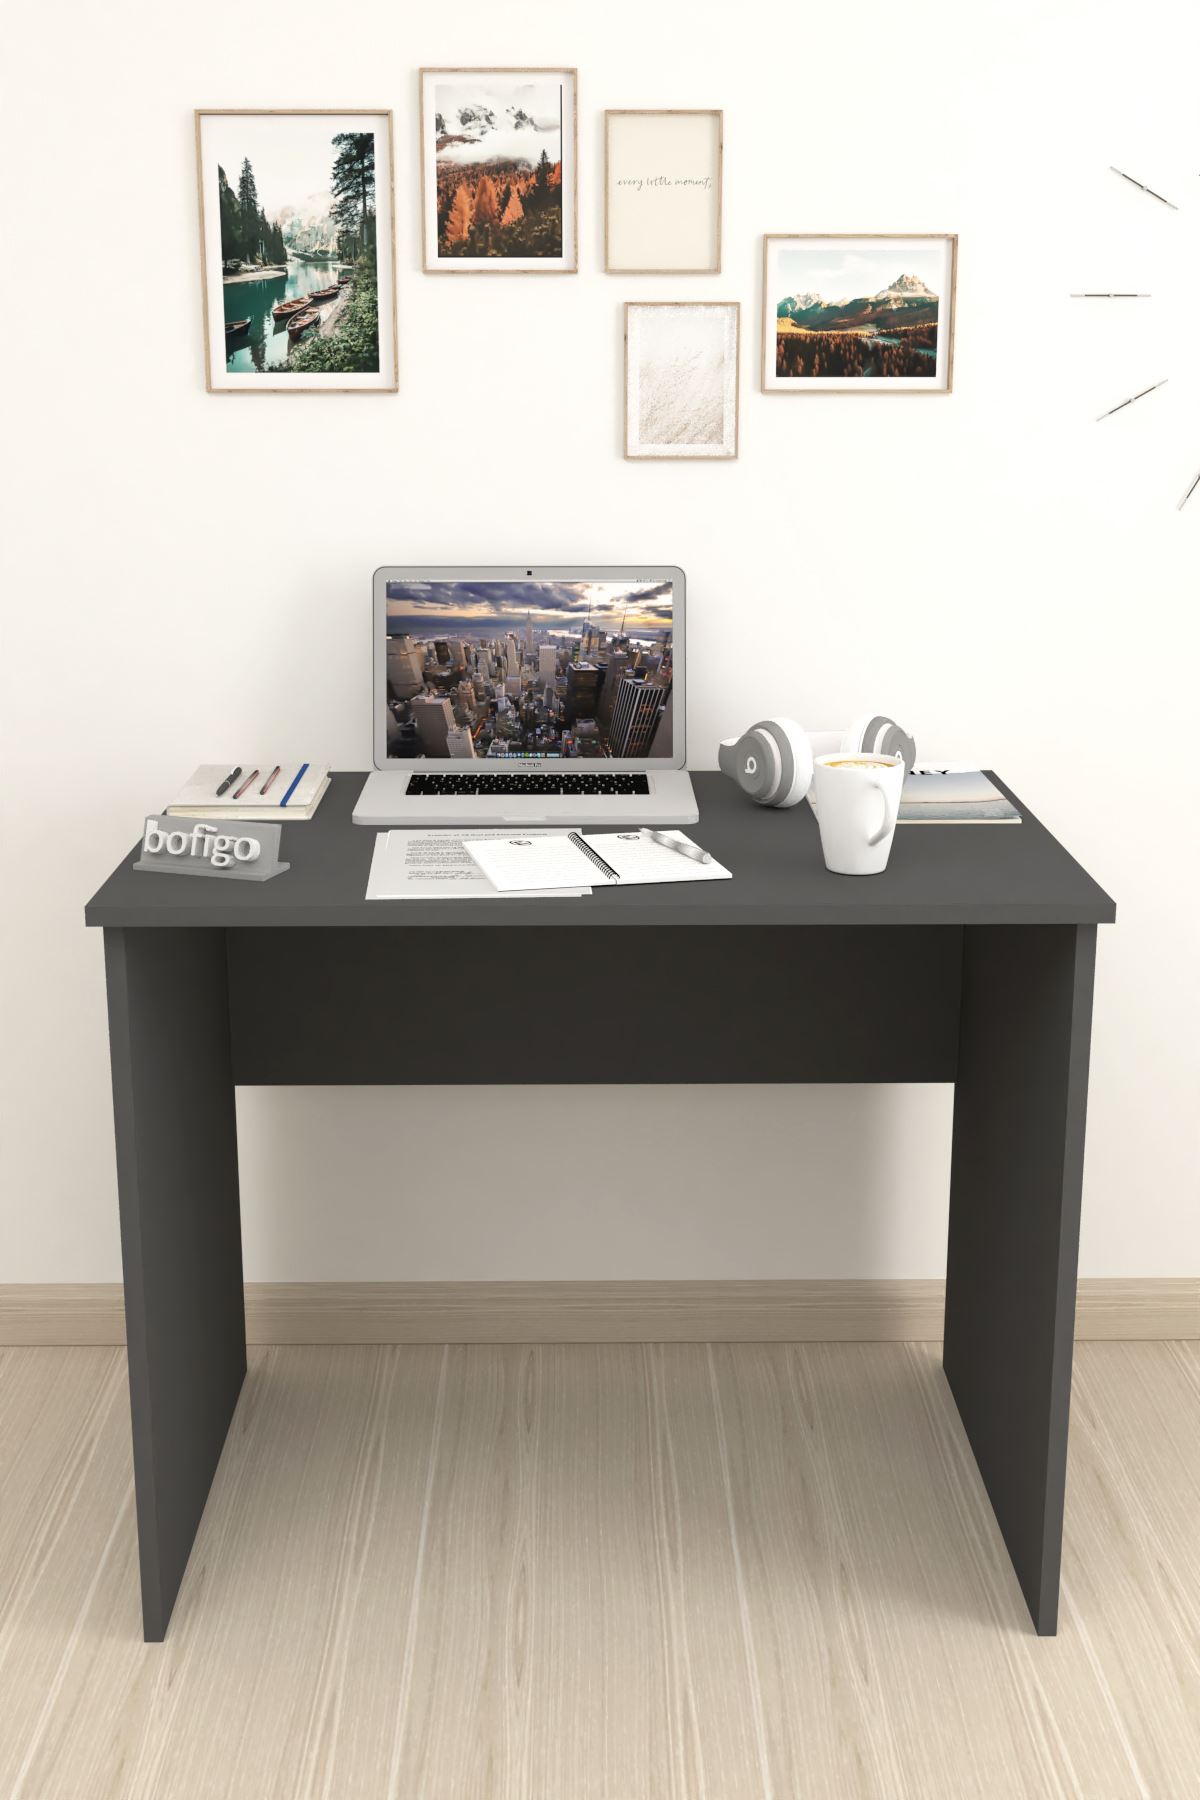 Bofigo 60x90 cm Çalışma Masası Bilgisayar Masası Ofis Masası Ders Masası Antrasit